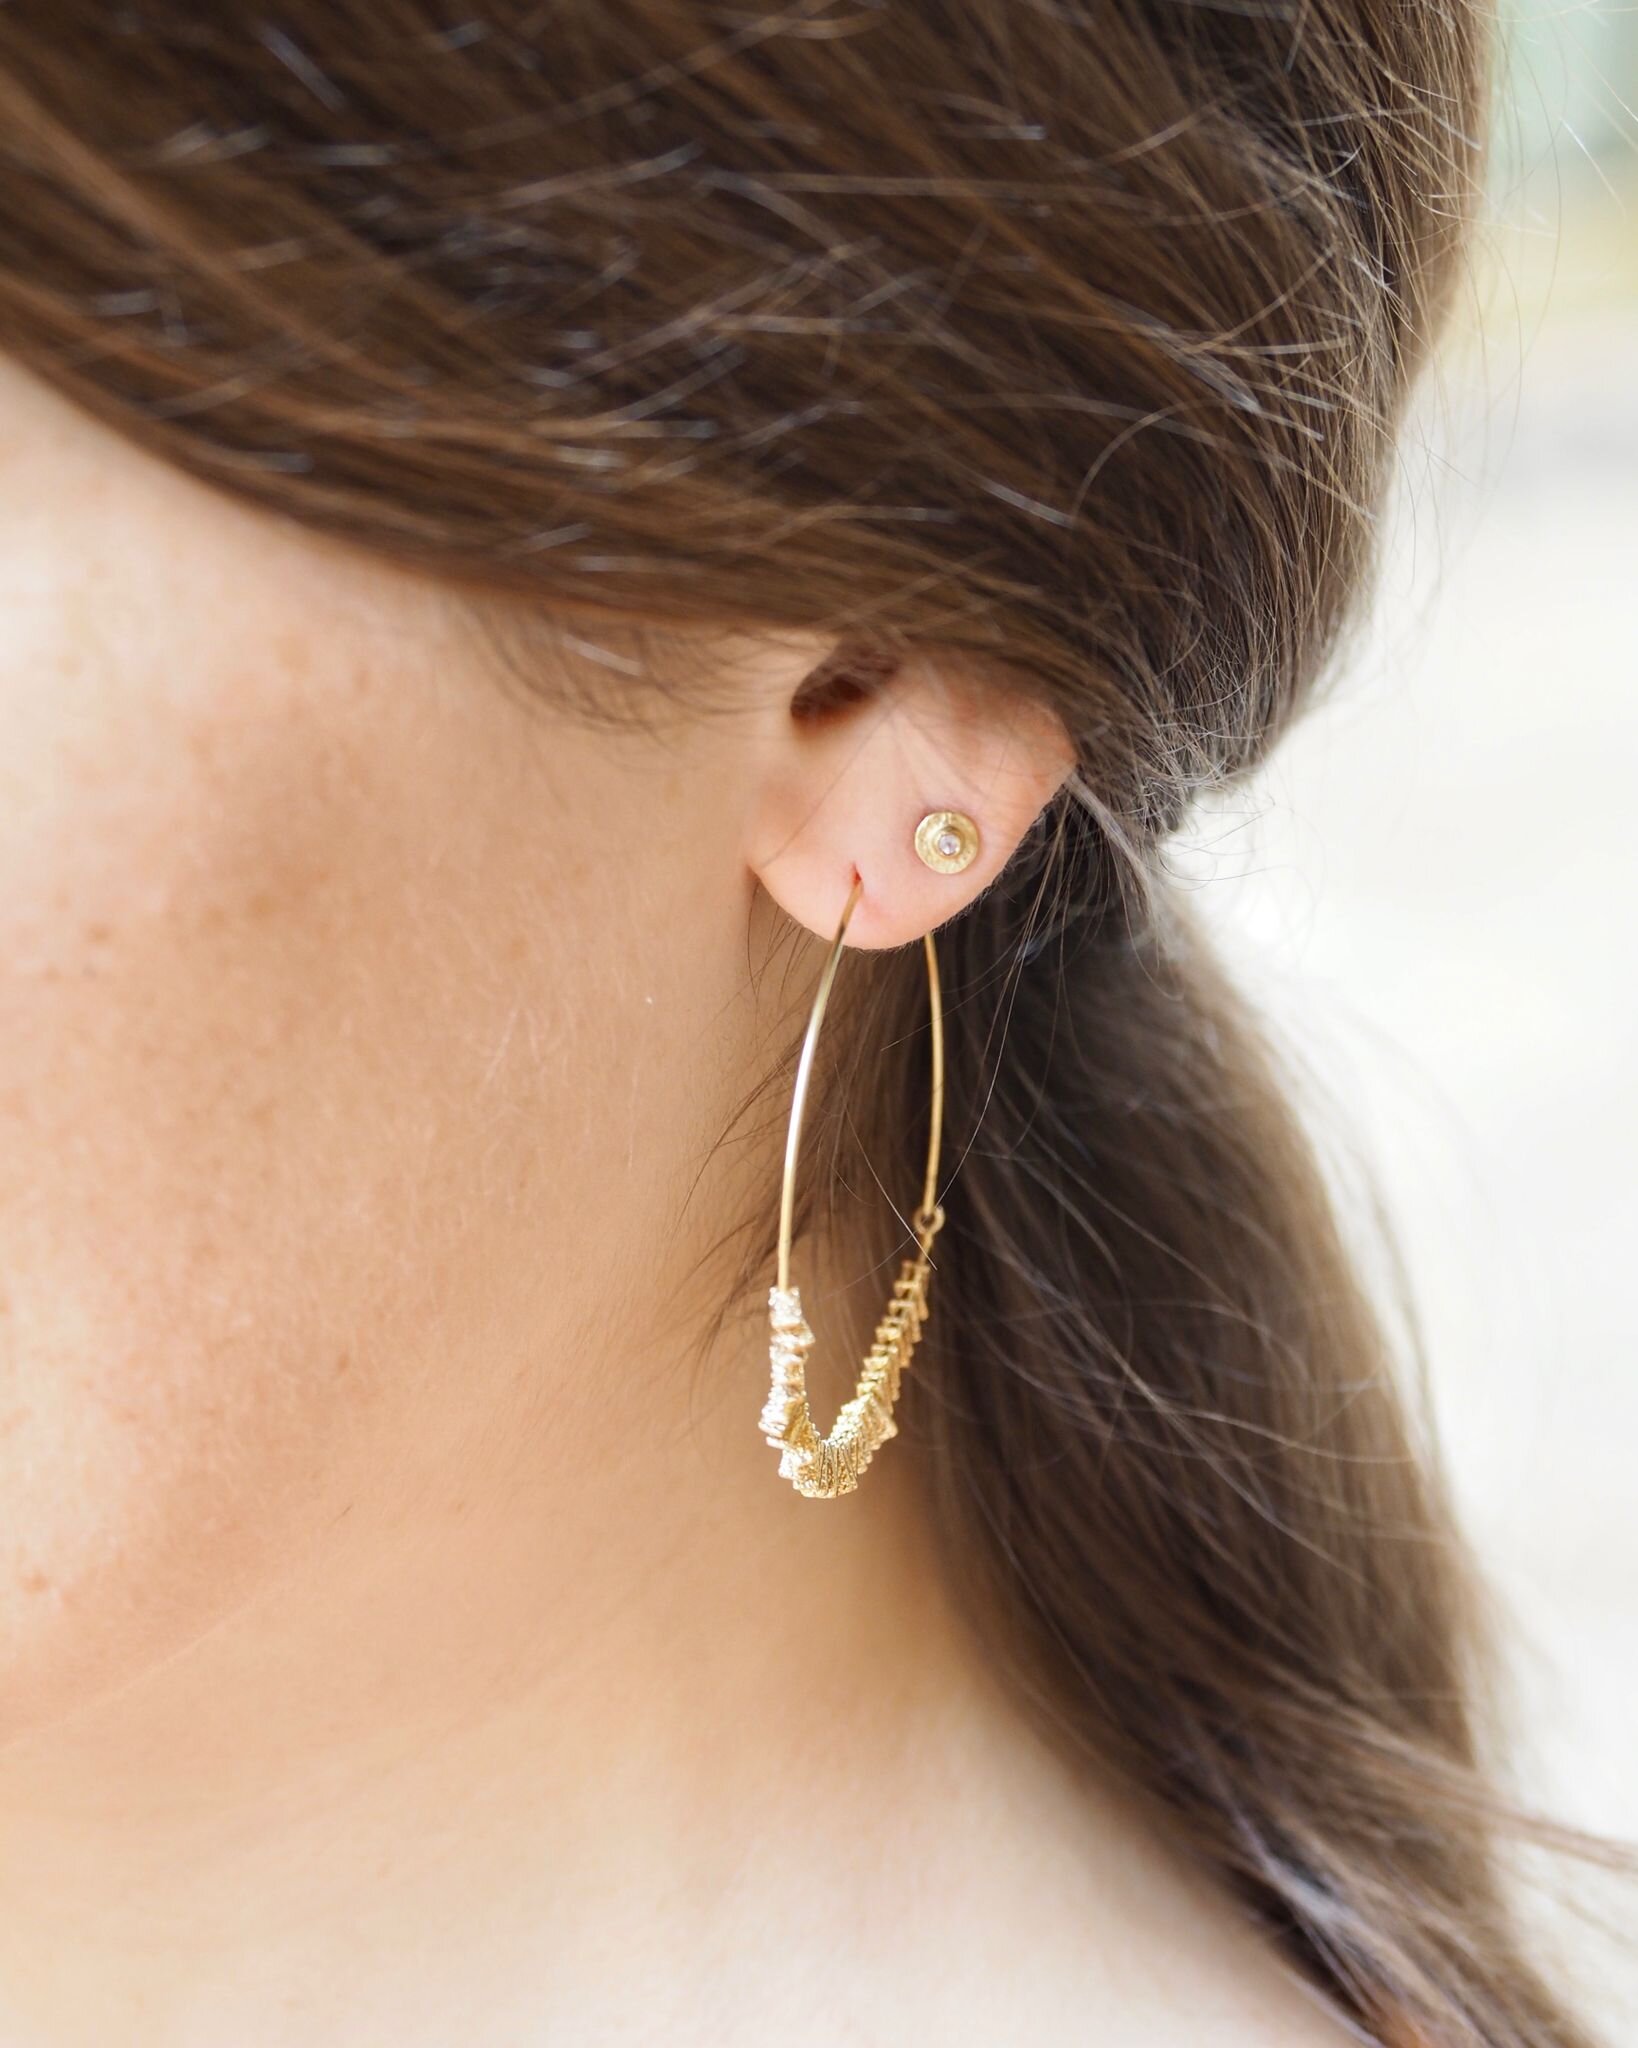 24ct Gold Vermeil Triangle Hoop Earrings gold plated 925 sterling silver large woman's earrings handmade jewellery